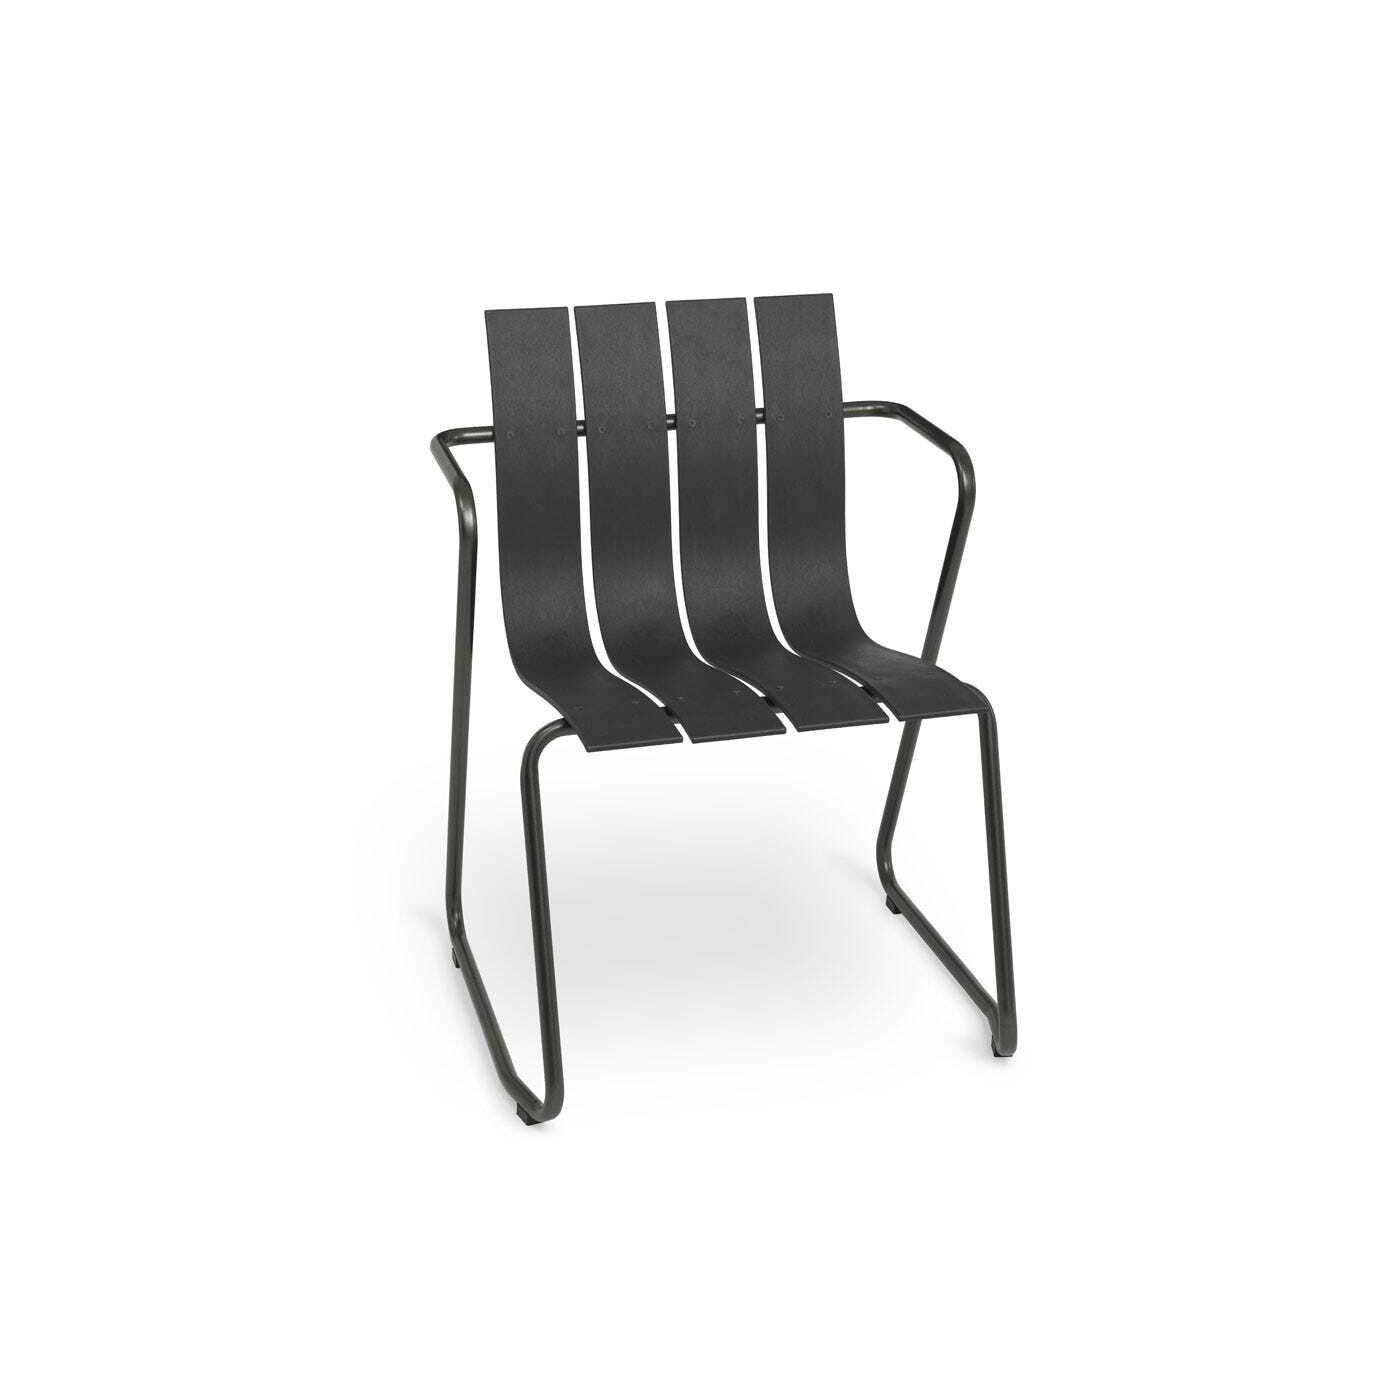 Mater Ocean Outdoor Chair Black - image 1